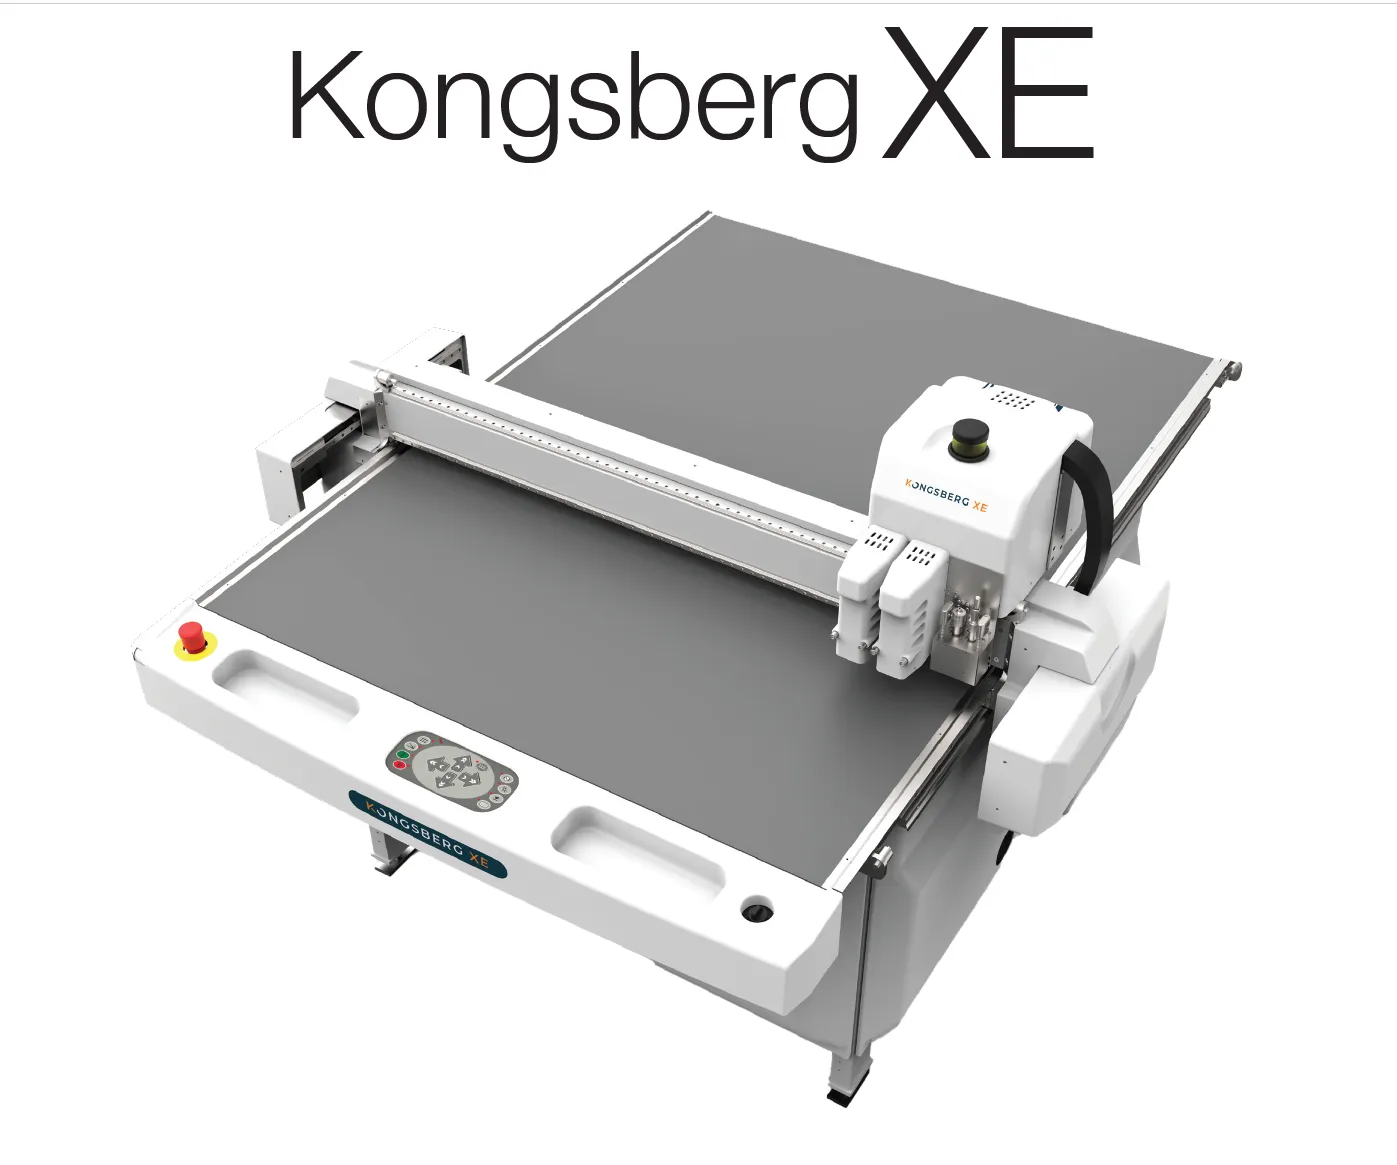 Kongsberg XEシリーズ ツール一覧 | NSK 日本製図器工業株式会社